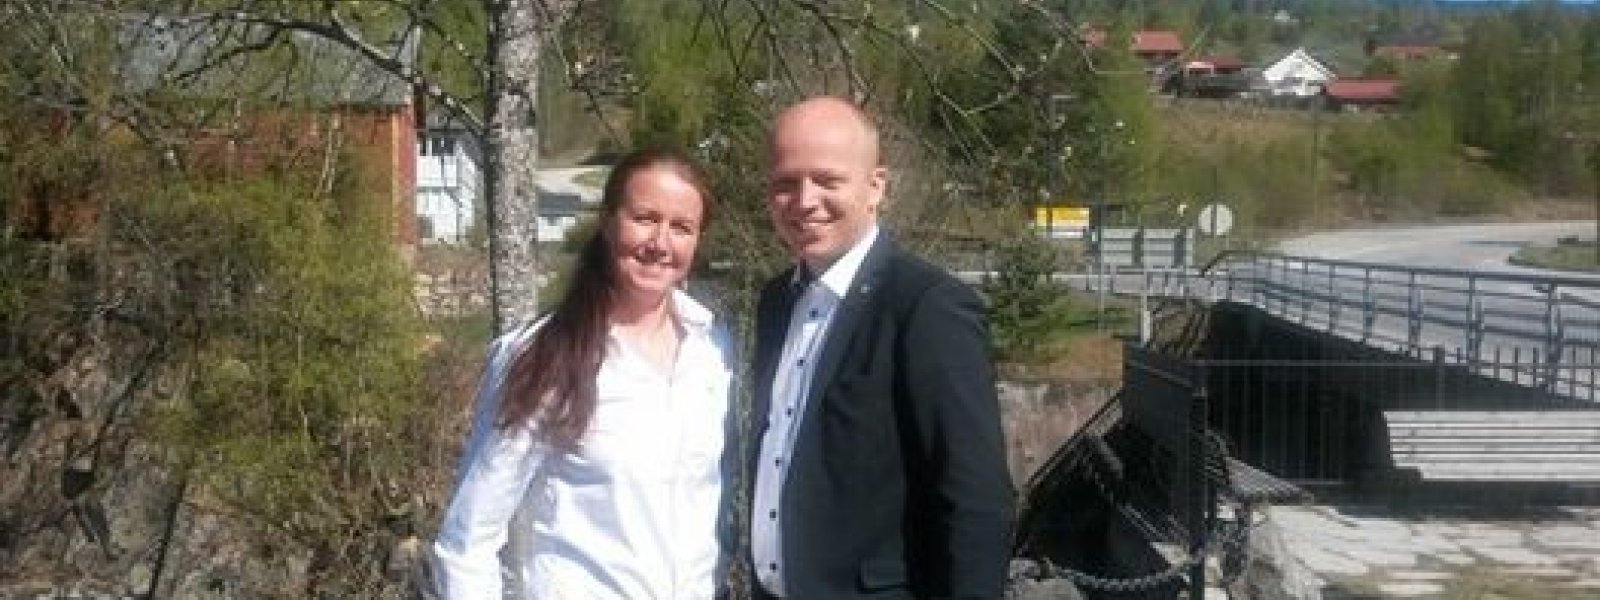 Heidi Herum er Telemark sin representant i valgkomiteen til landsmøtet i Haugesund 19-.21.mars 2021